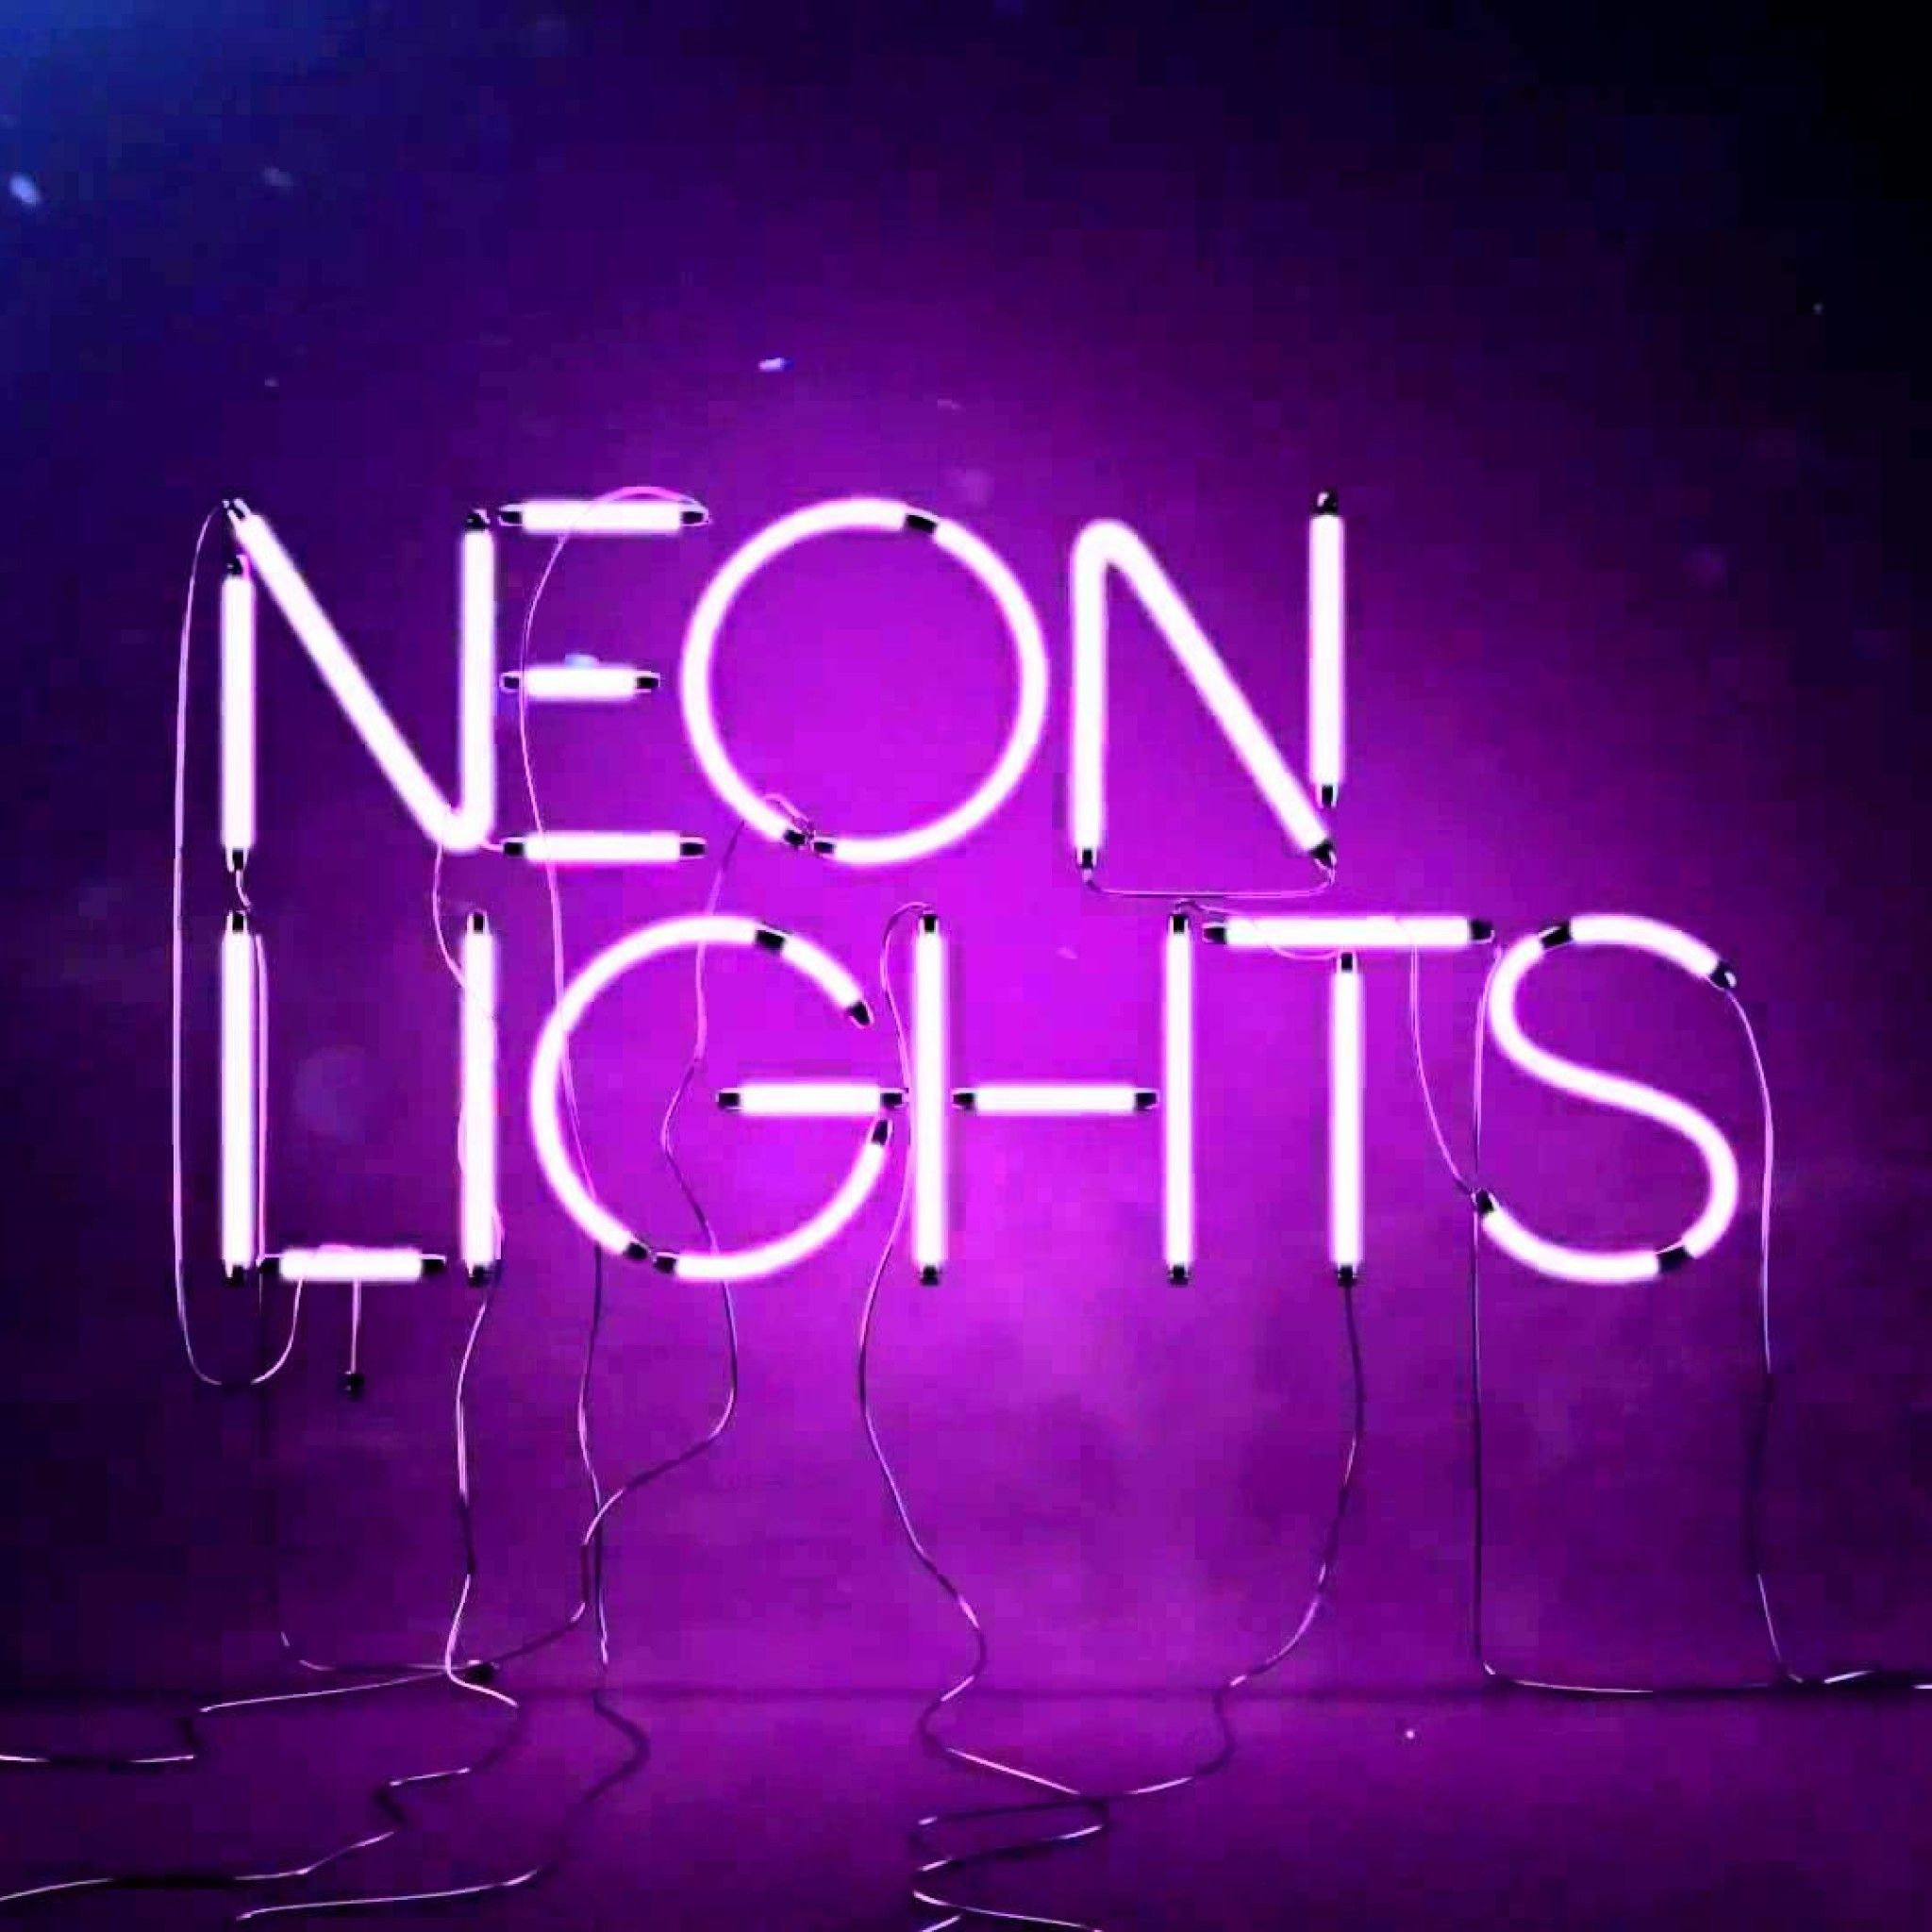 neon purple zoom logo